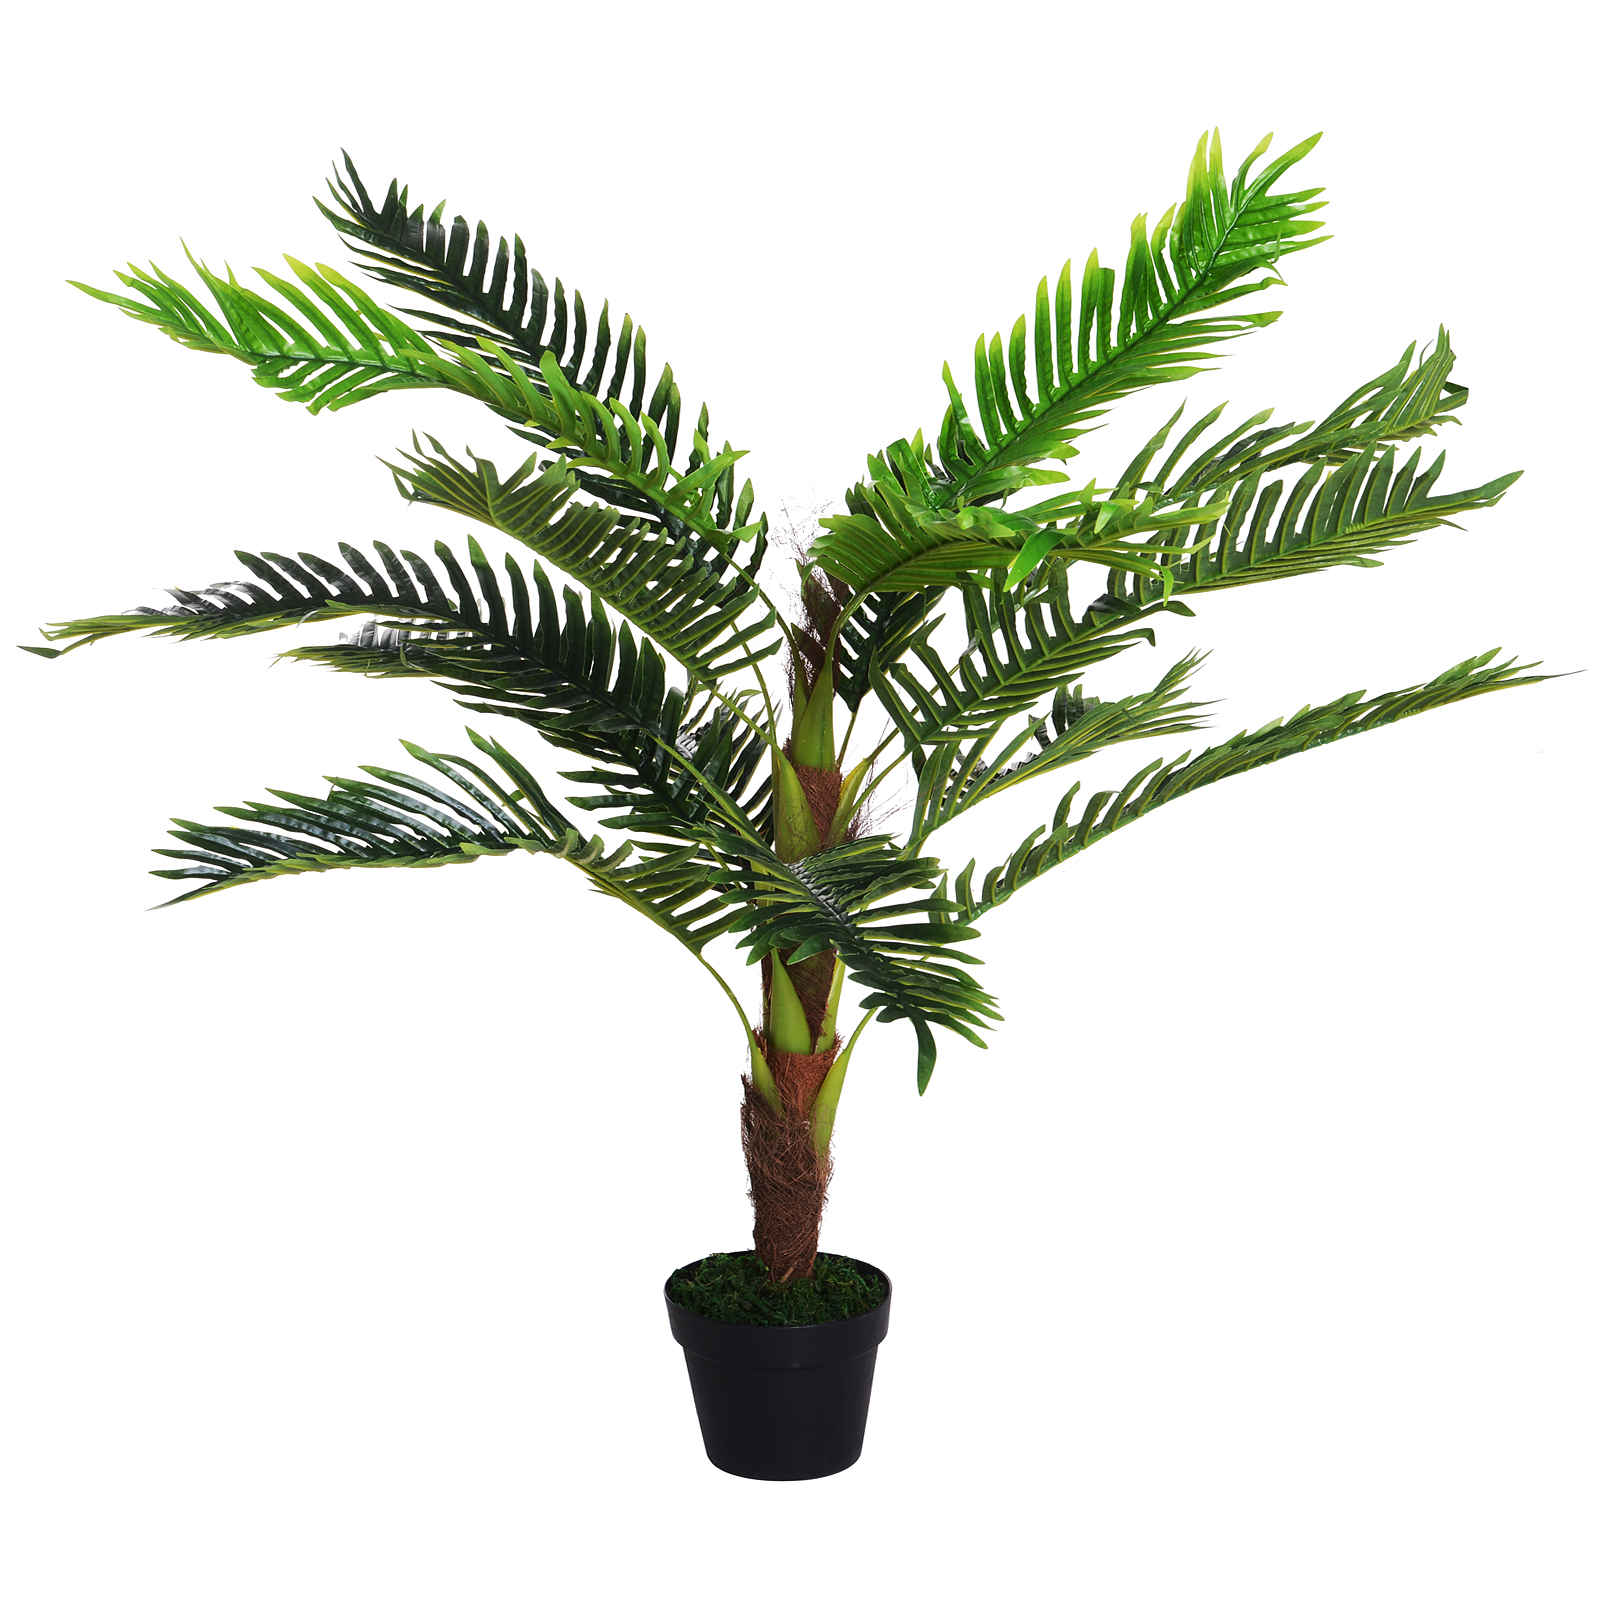 Outsunny Artificial Palm Cycas Plant High 123cm για εσωτερικούς και εξωτερικούς χώρους με περιλαμβάνεται γλάστρα